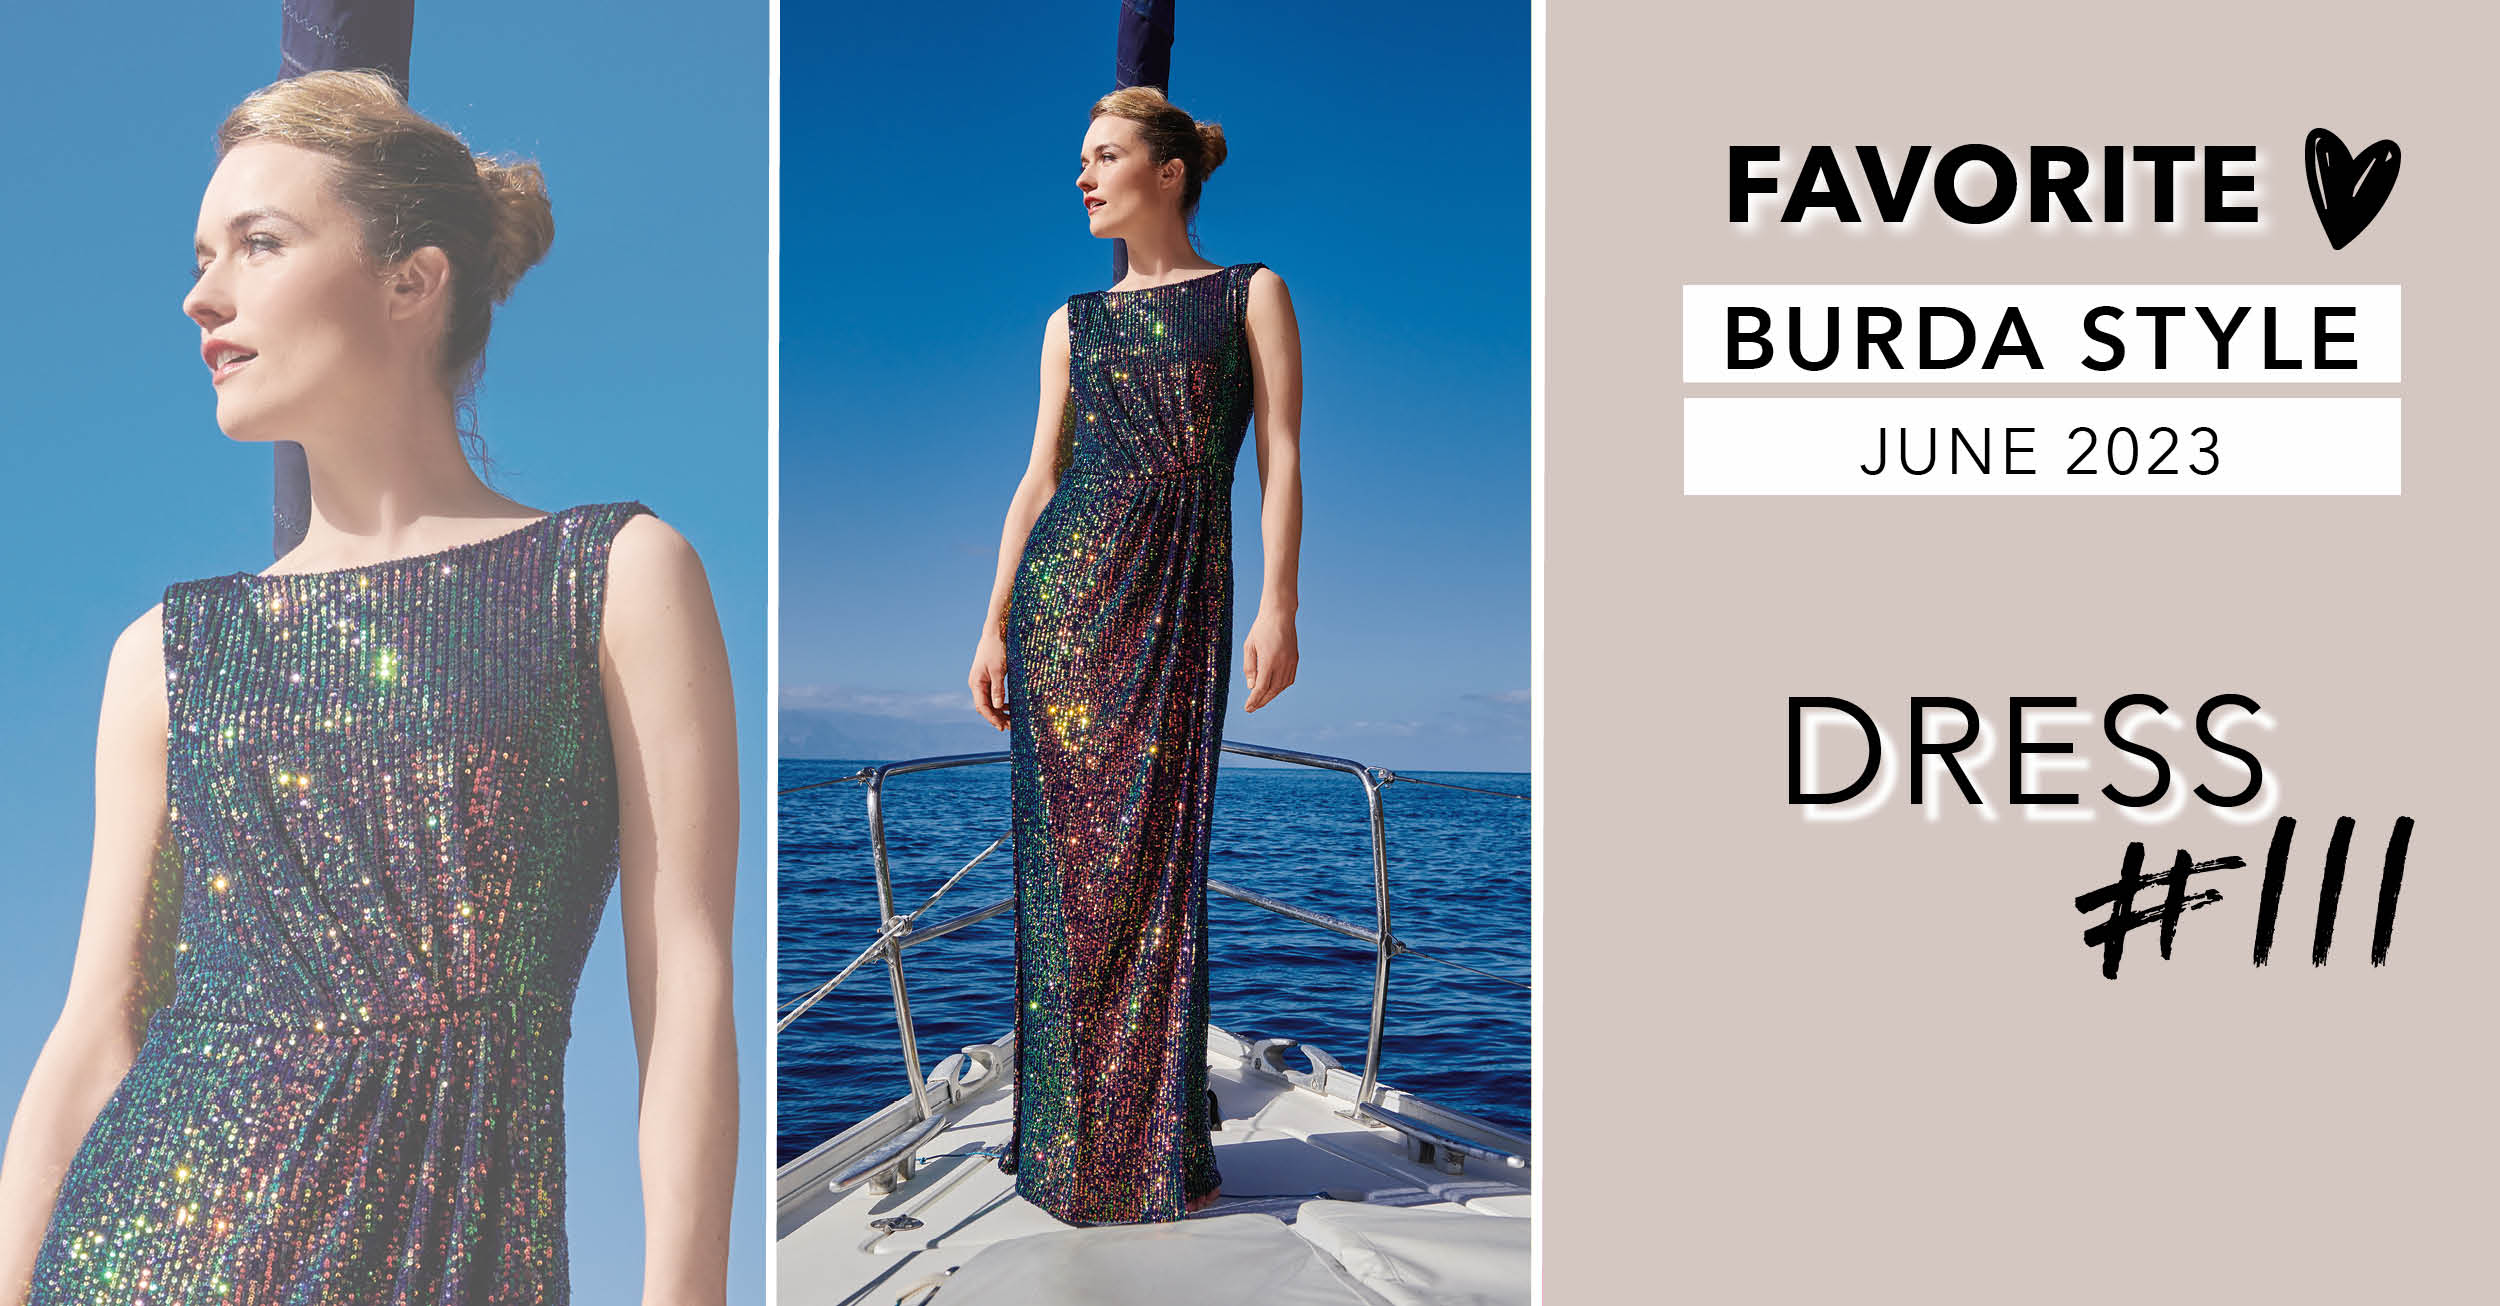 Favorite Pick : An Evening Gown in Burda Style June 2023